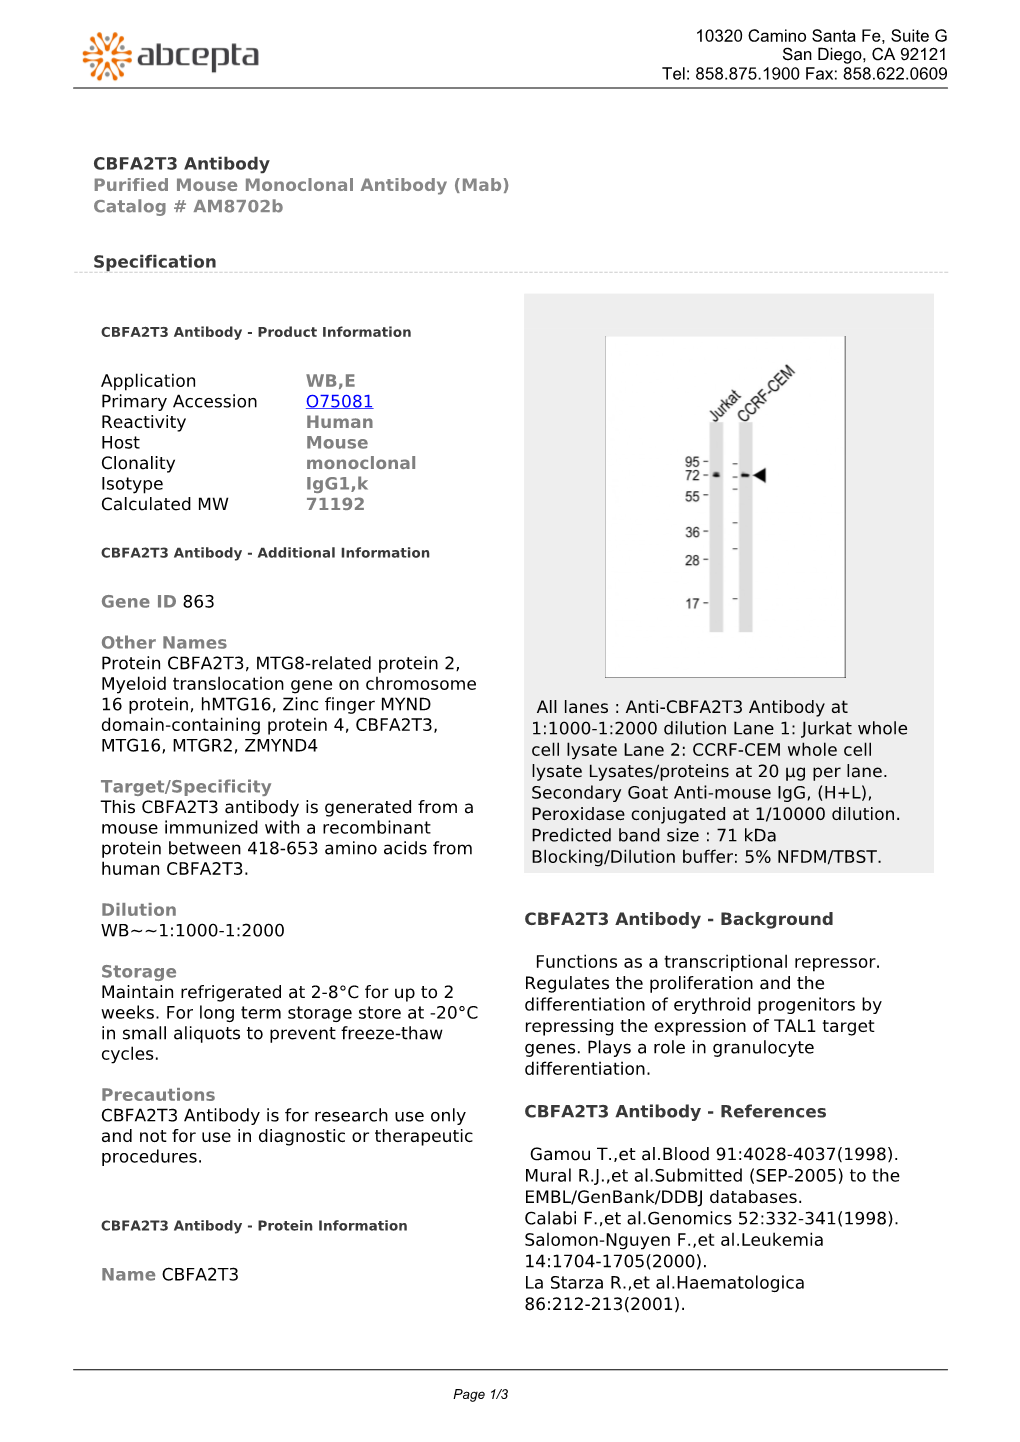 CBFA2T3 Antibody Purified Mouse Monoclonal Antibody (Mab) Catalog # Am8702b